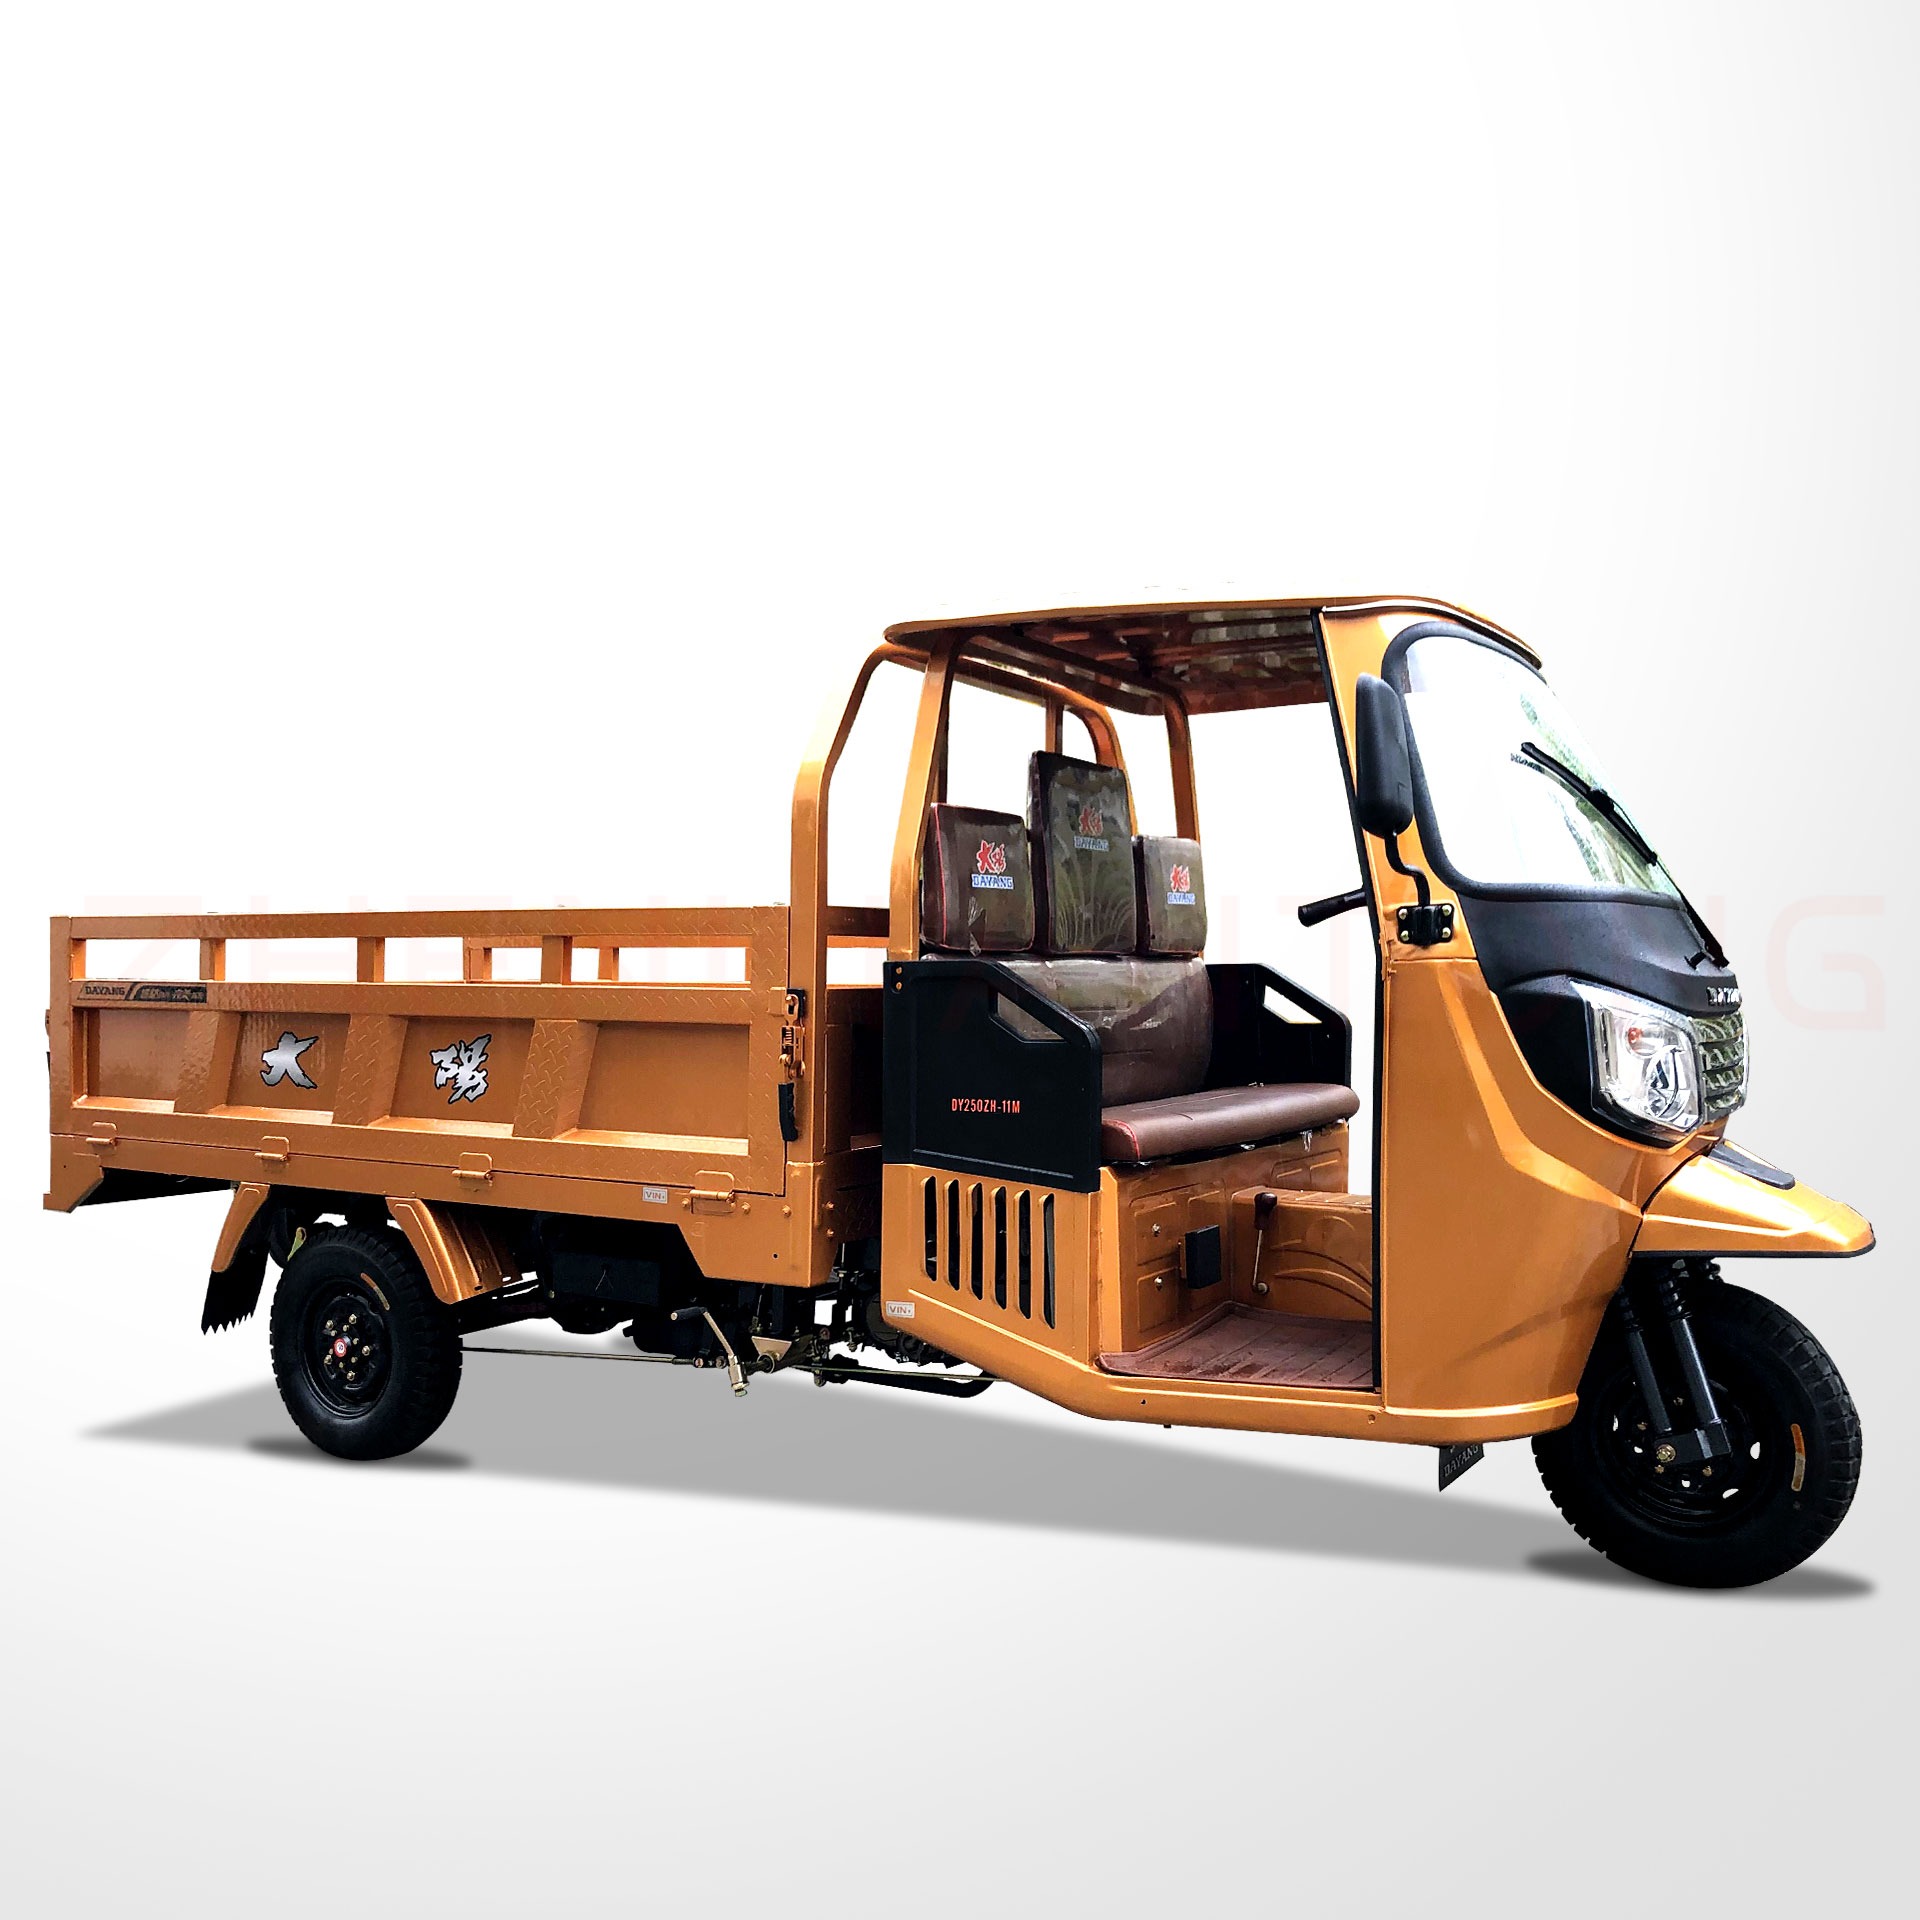 China Top Brand Adult motorized tricycles 250CC Big Space Cheap Good Quality Cabin Tuk Tuk Ccc Method Origin